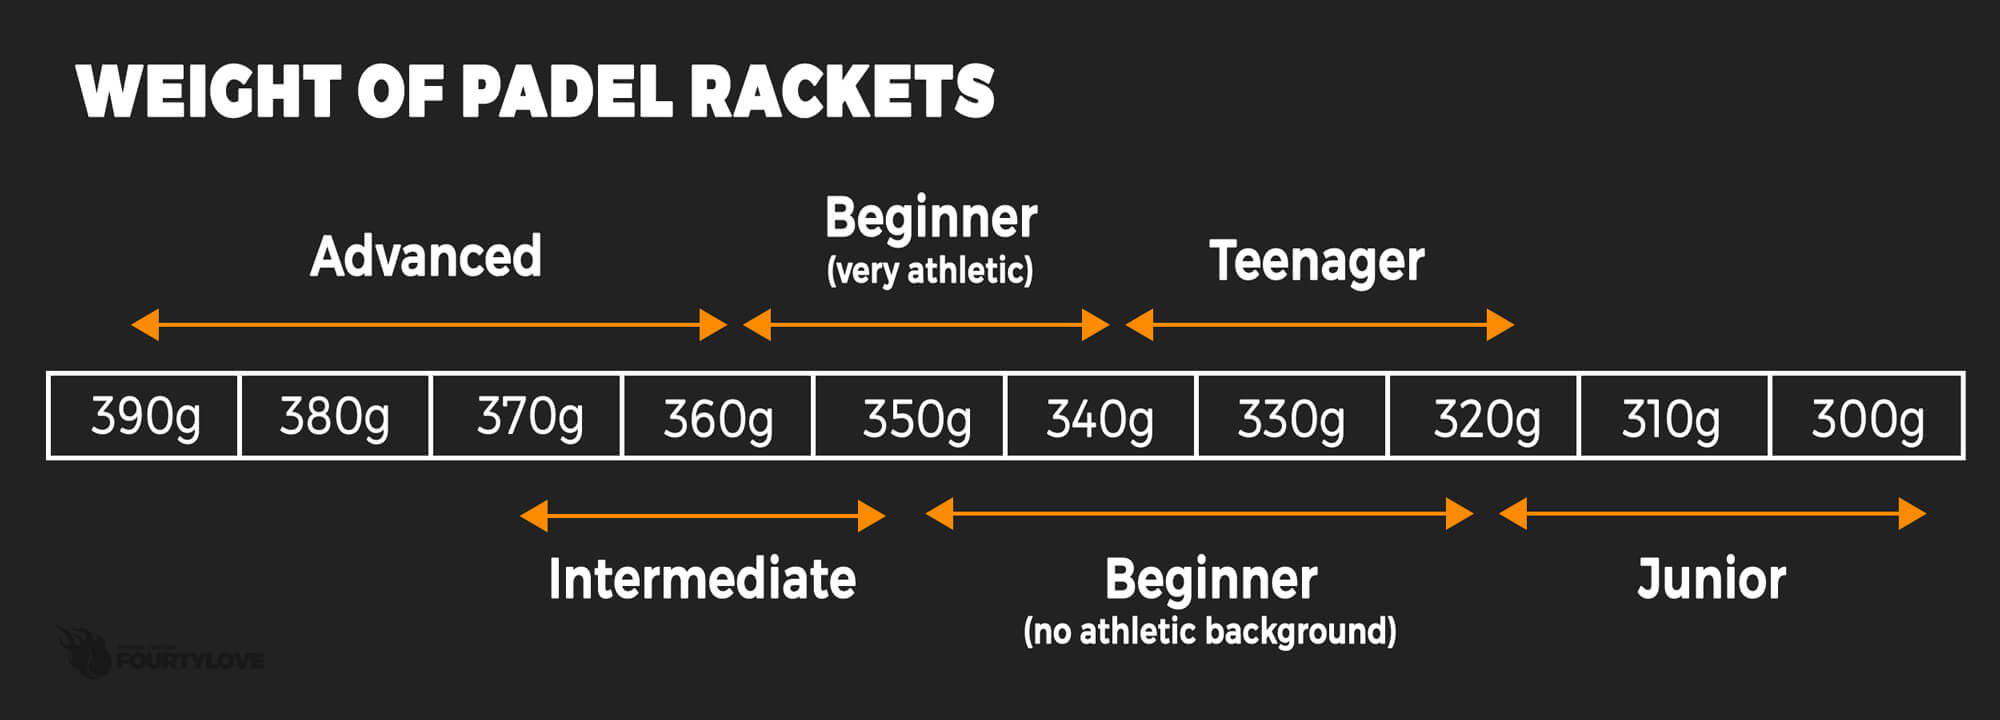 padel-racket-weight-for-beginners-intermediate-and-kids-1